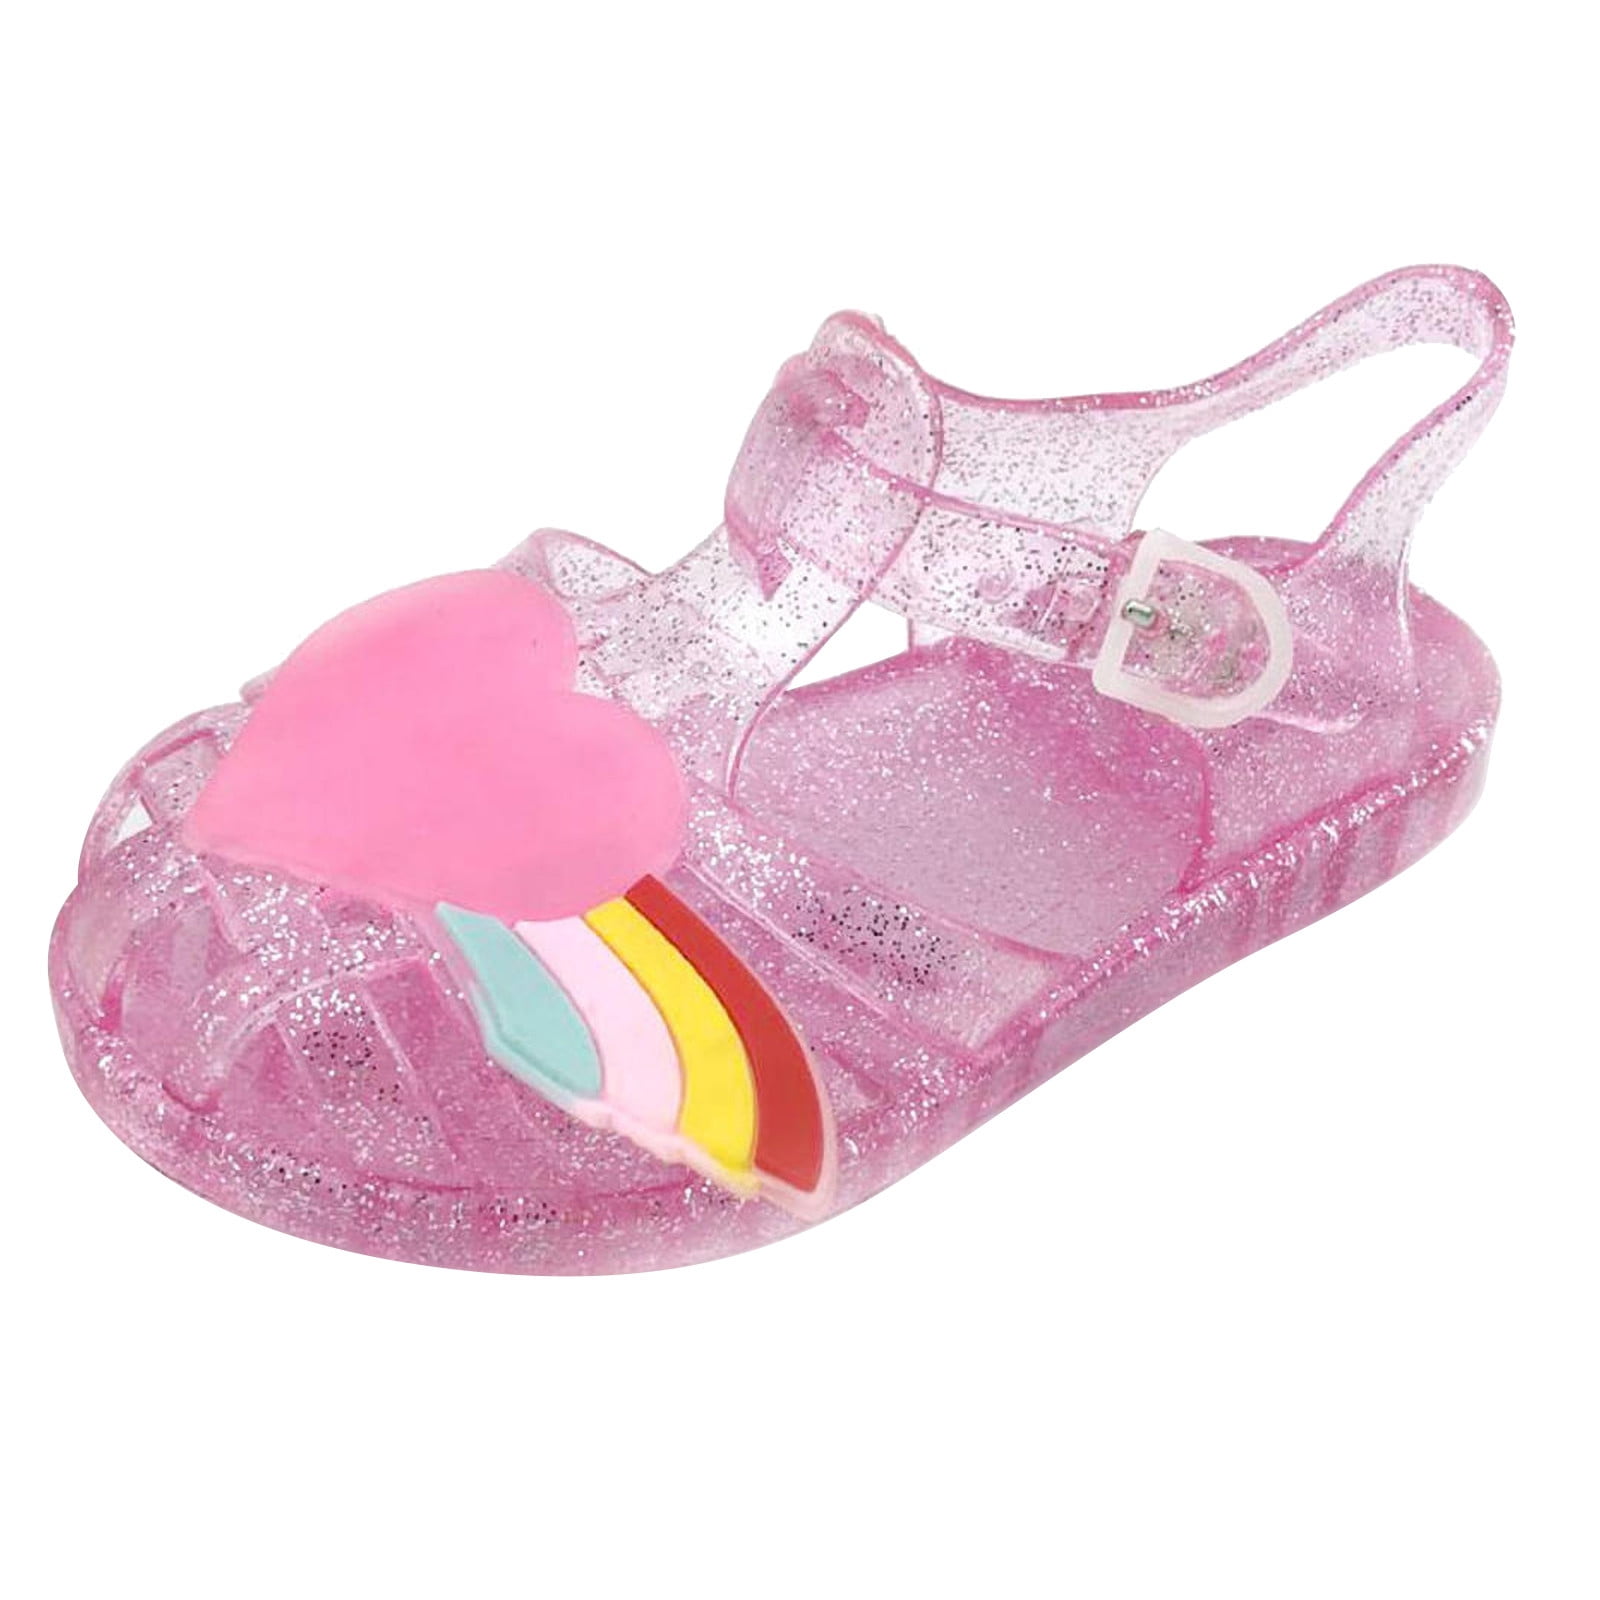 VerPetridure Clearance Sandals for Toddler Girls Toddler Summer